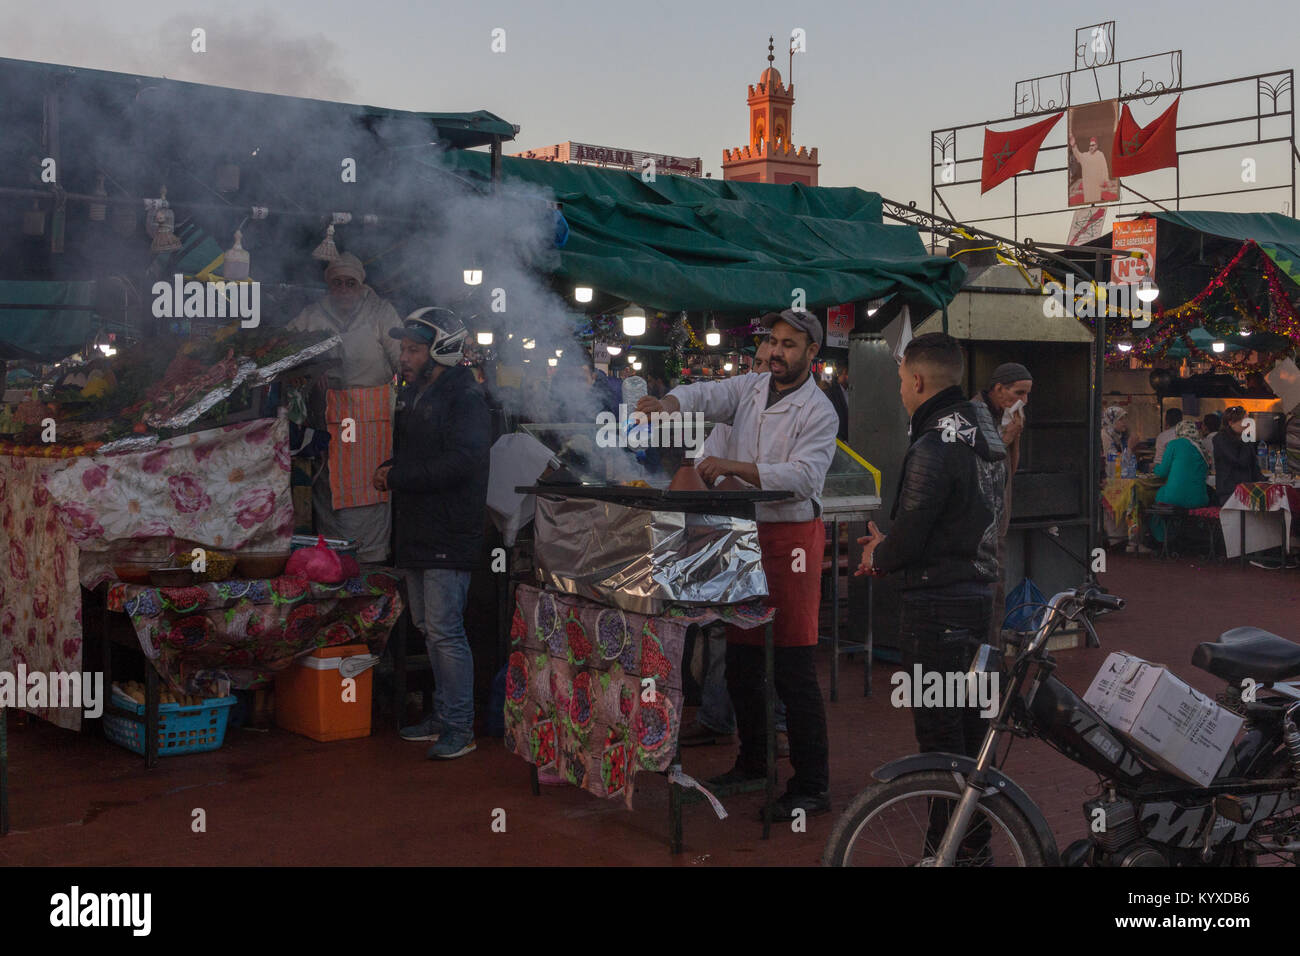 A man cooks meet on a bar-b-que in Jemaa el-Fnaa, Marrakesh, Morocco Stock Photo